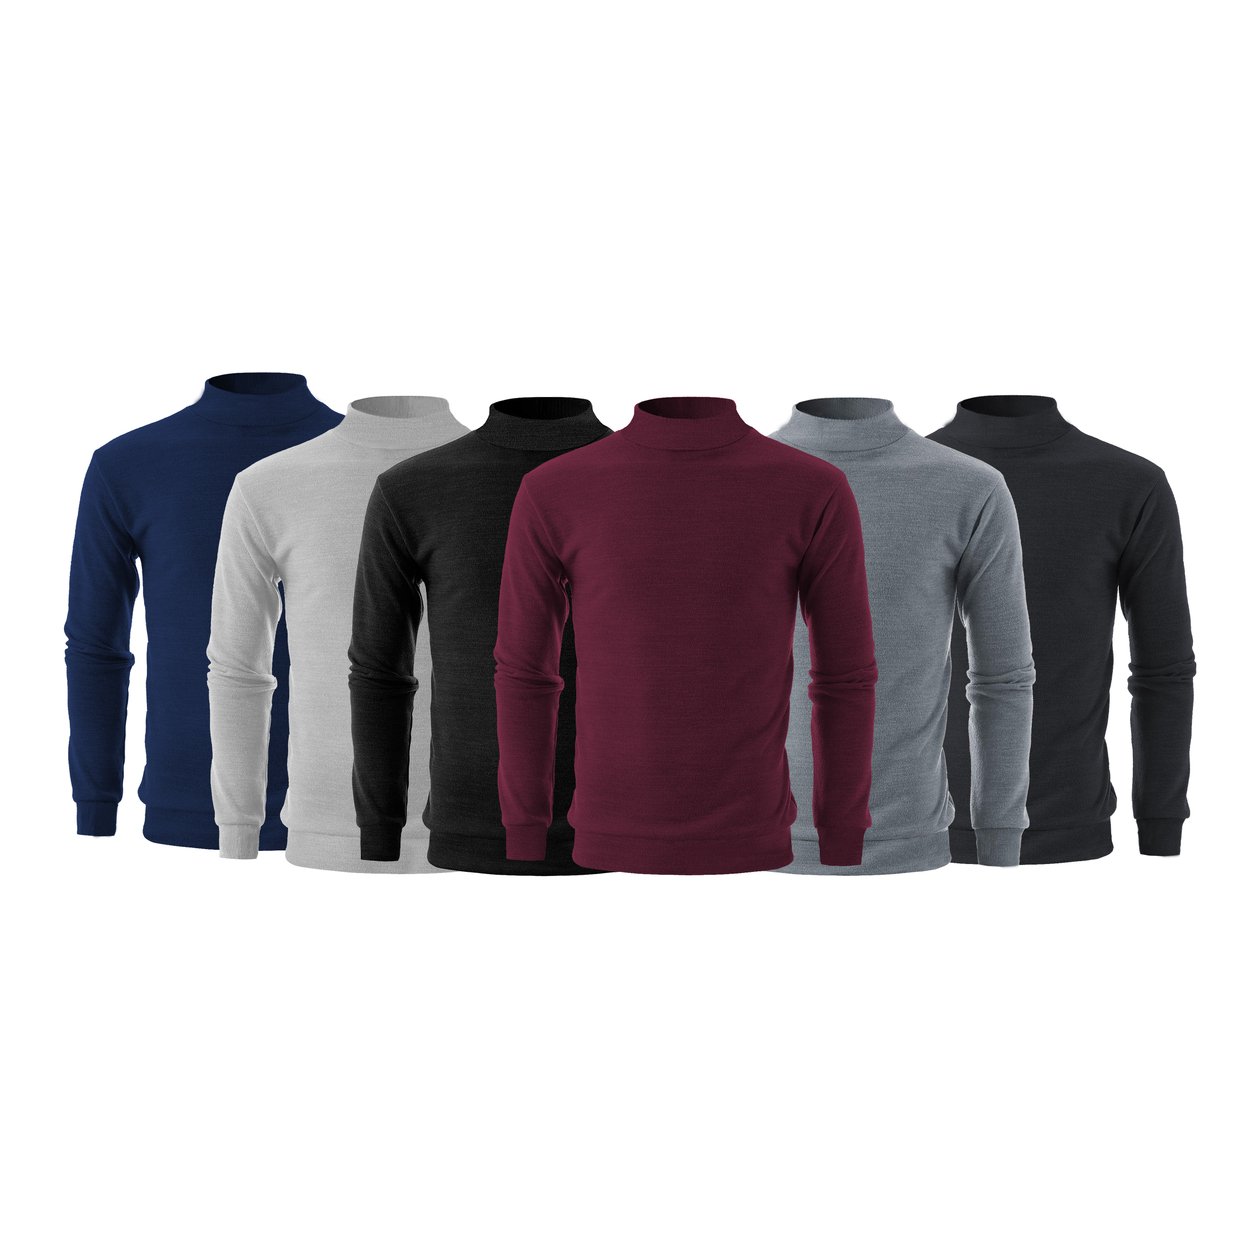 3-Pack: Men's Winter Warm Cozy Knit Slim Fit Mock Neck Sweater - X-large